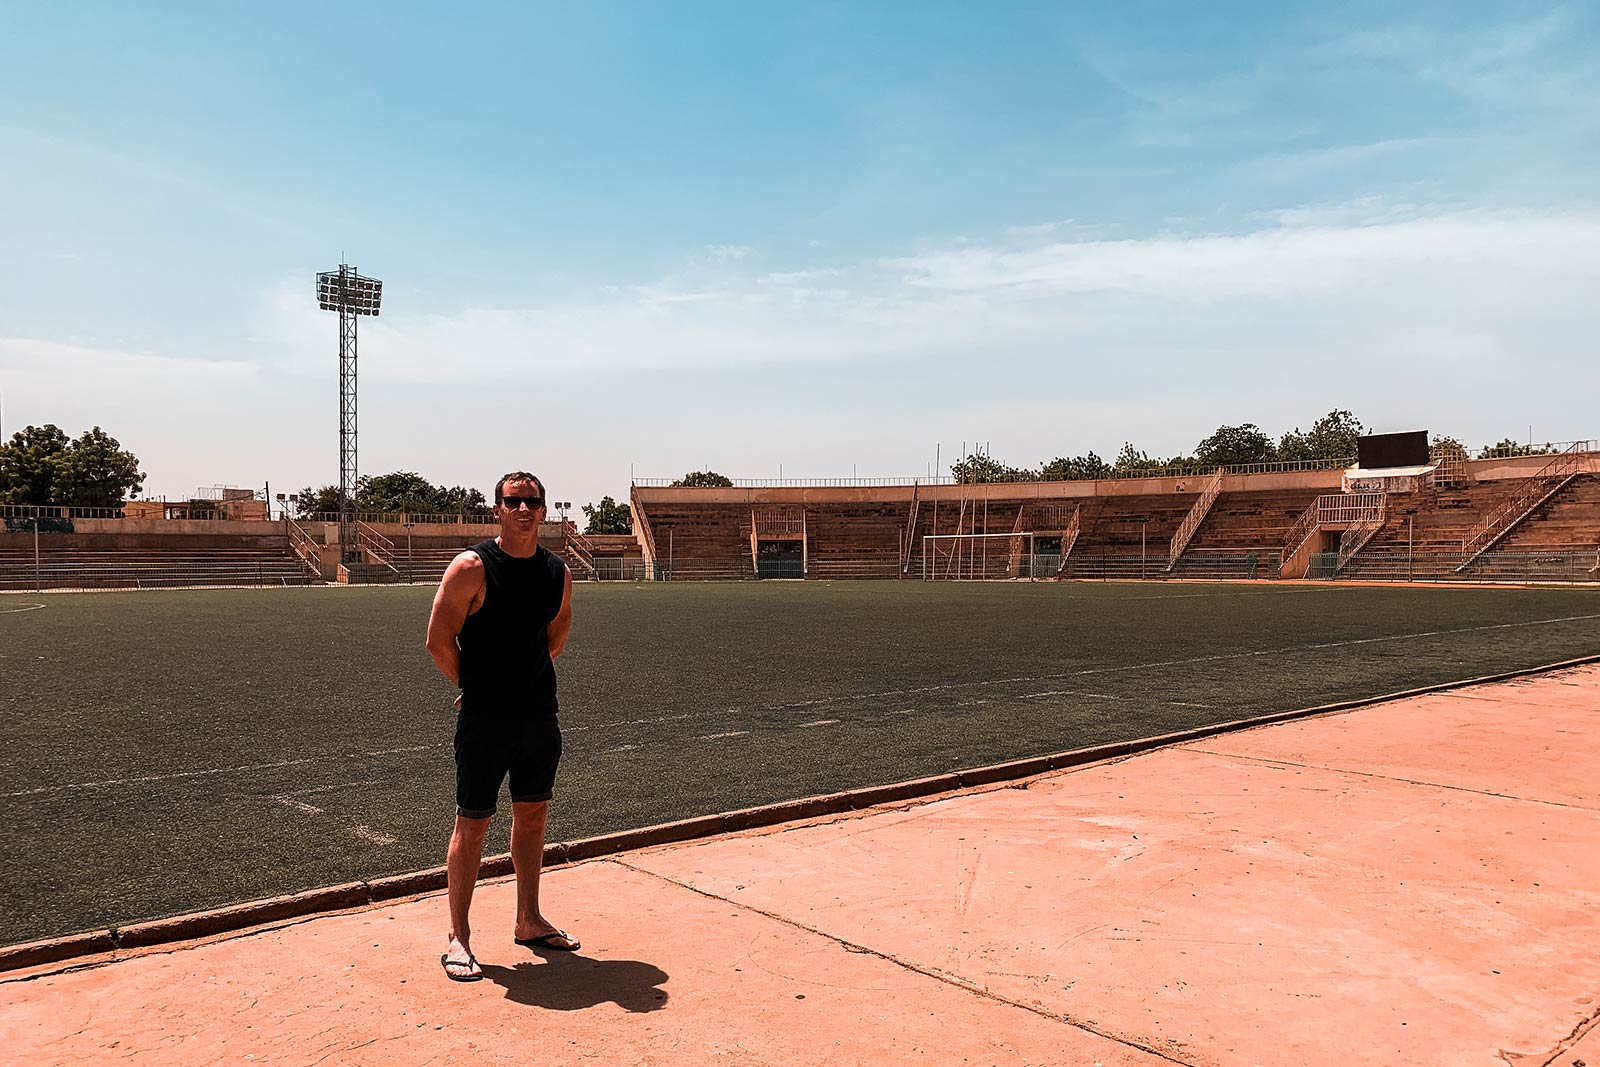 David Simpson at football stadium in Ouagadougou, Burkina Faso. The most horrible zoo